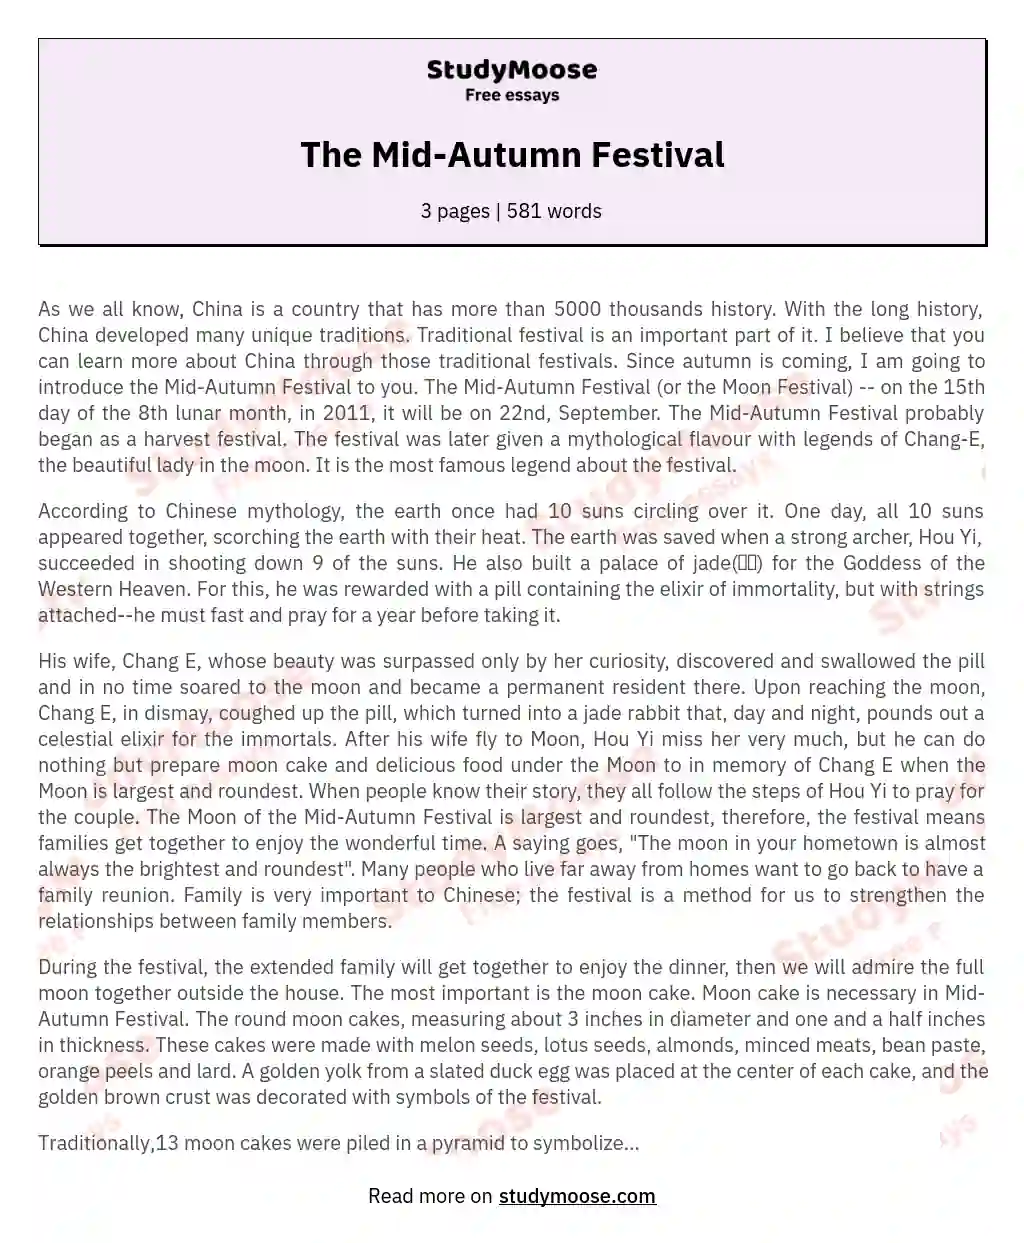 The Mid-Autumn Festival essay